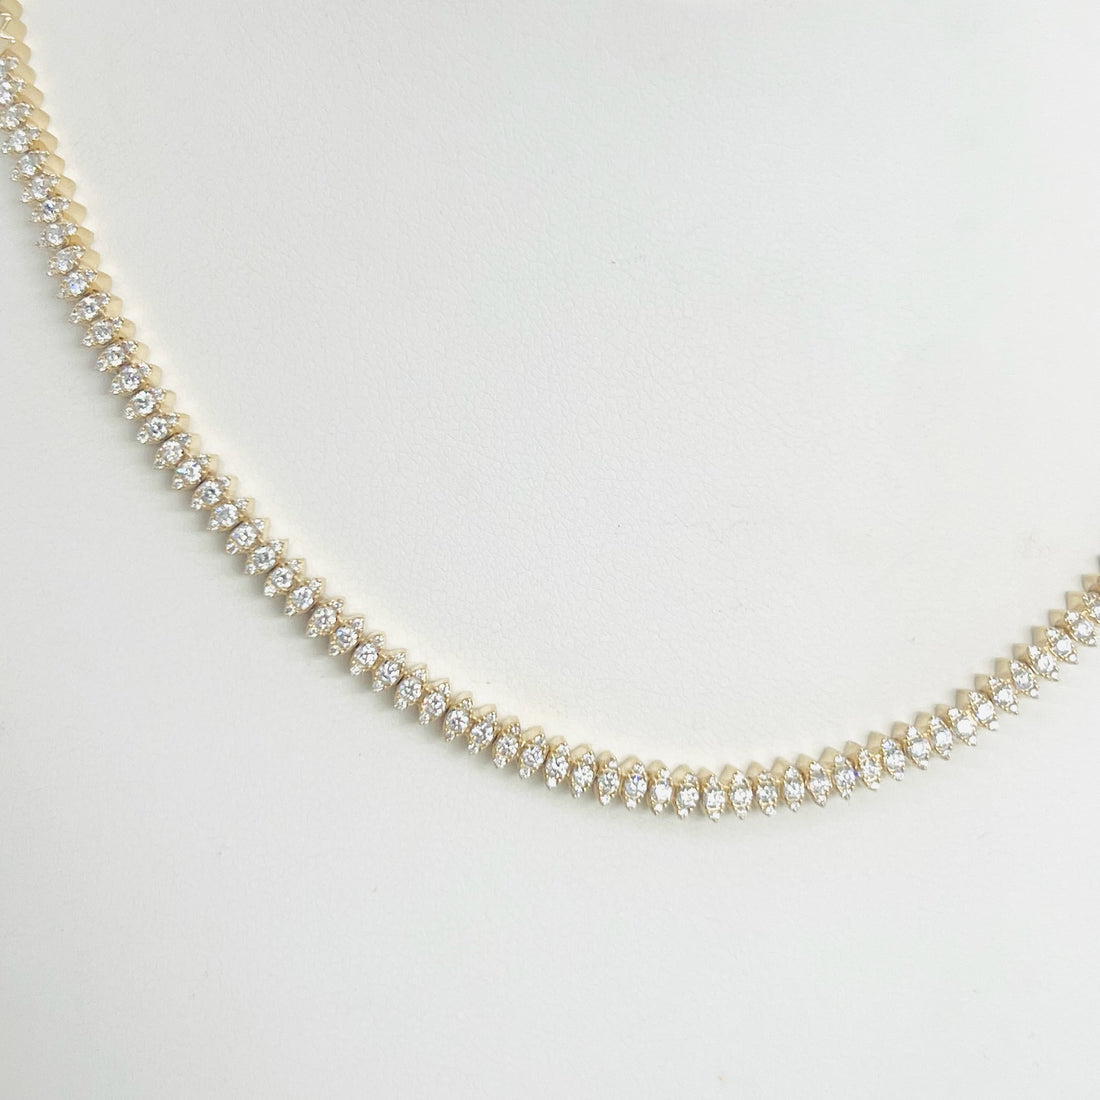 marquis shaped diamond tennis necklace